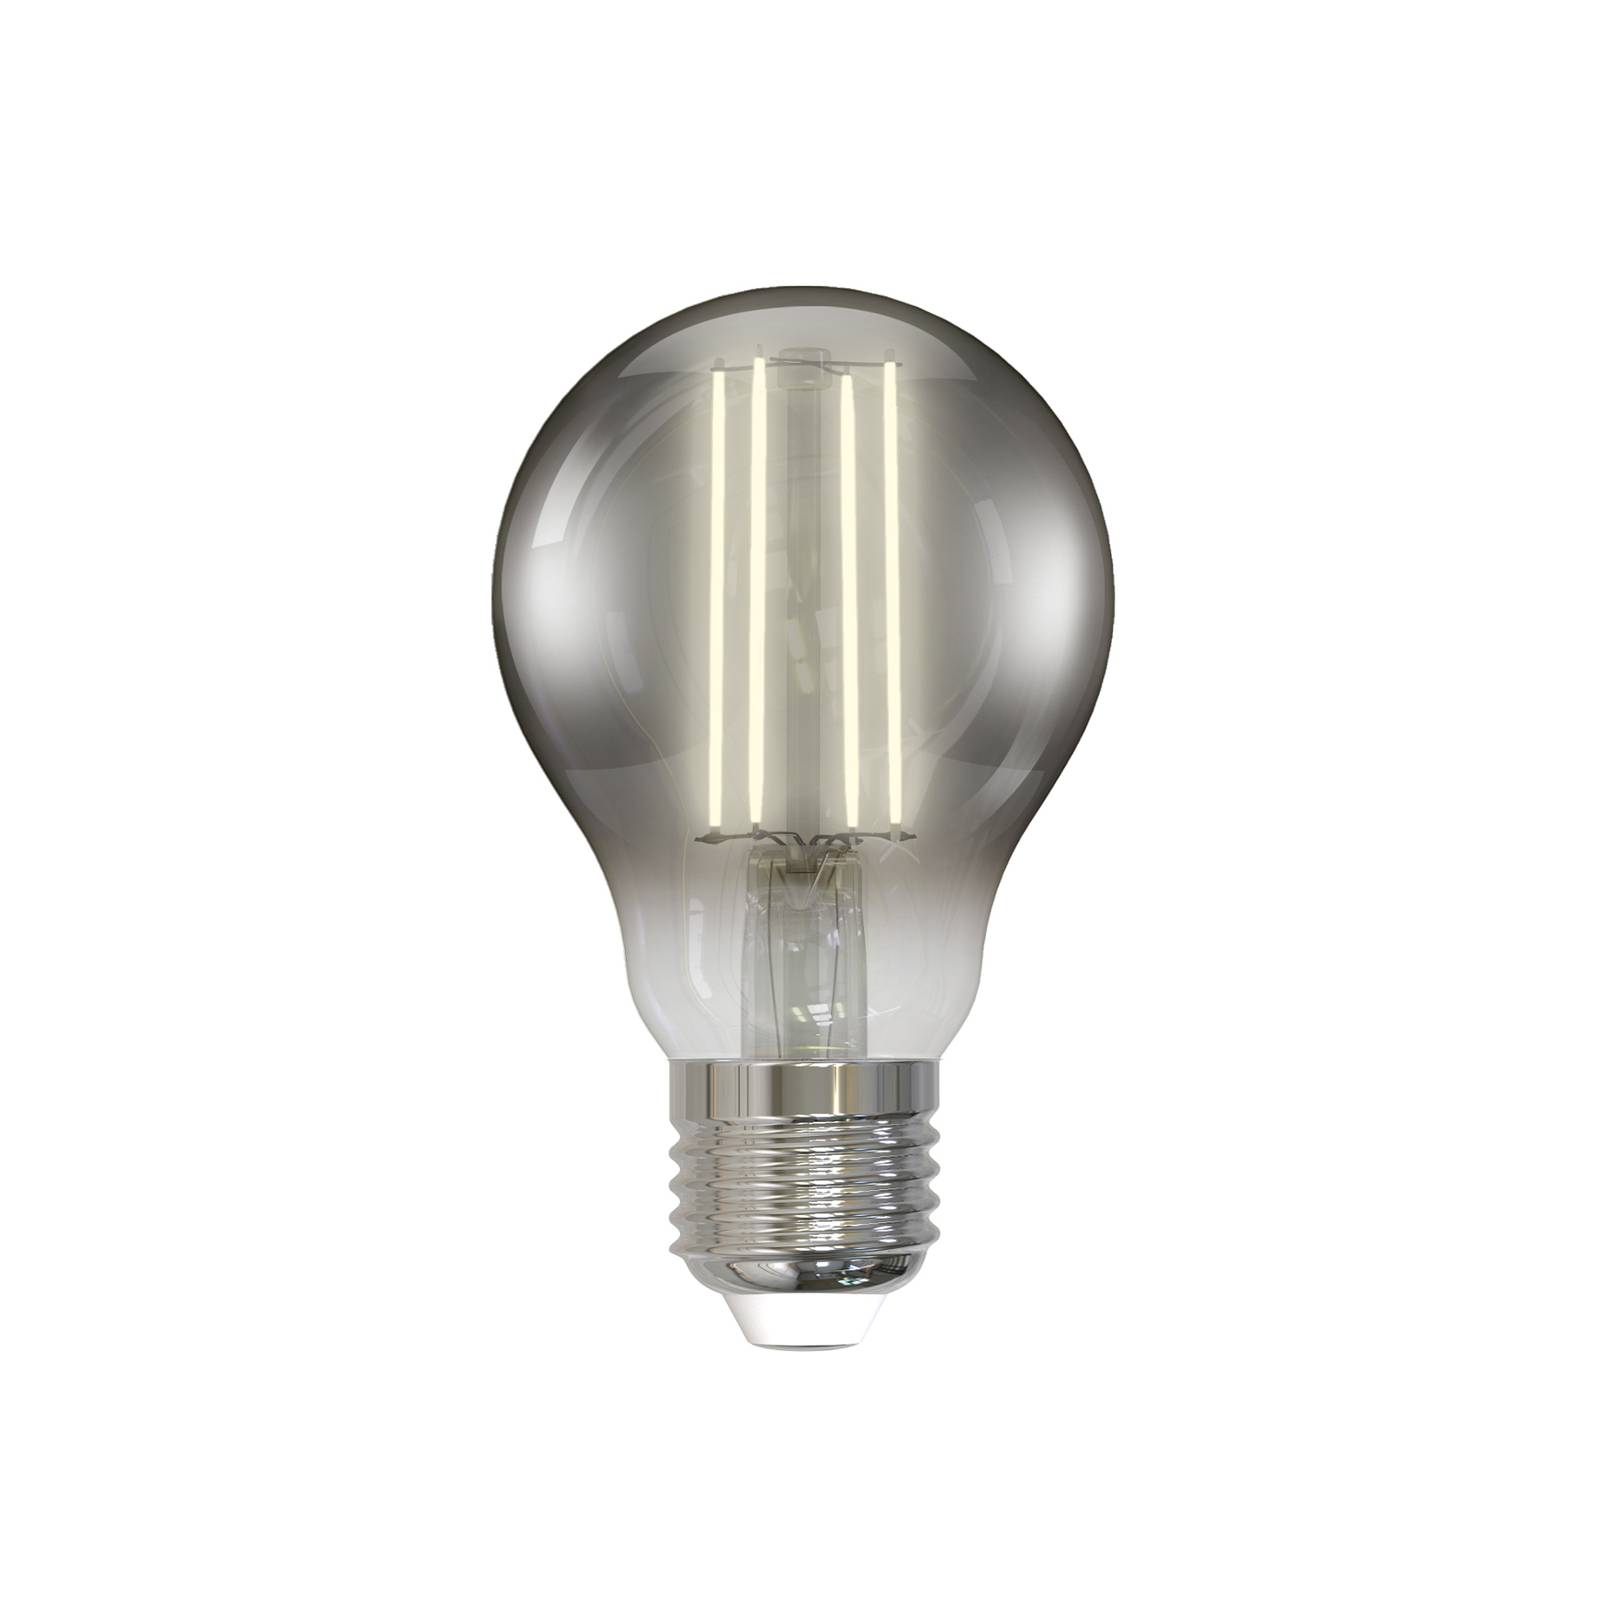 PRIOS Smart LED-Filament rauchgrau E27 A60 WLAN 4,9W